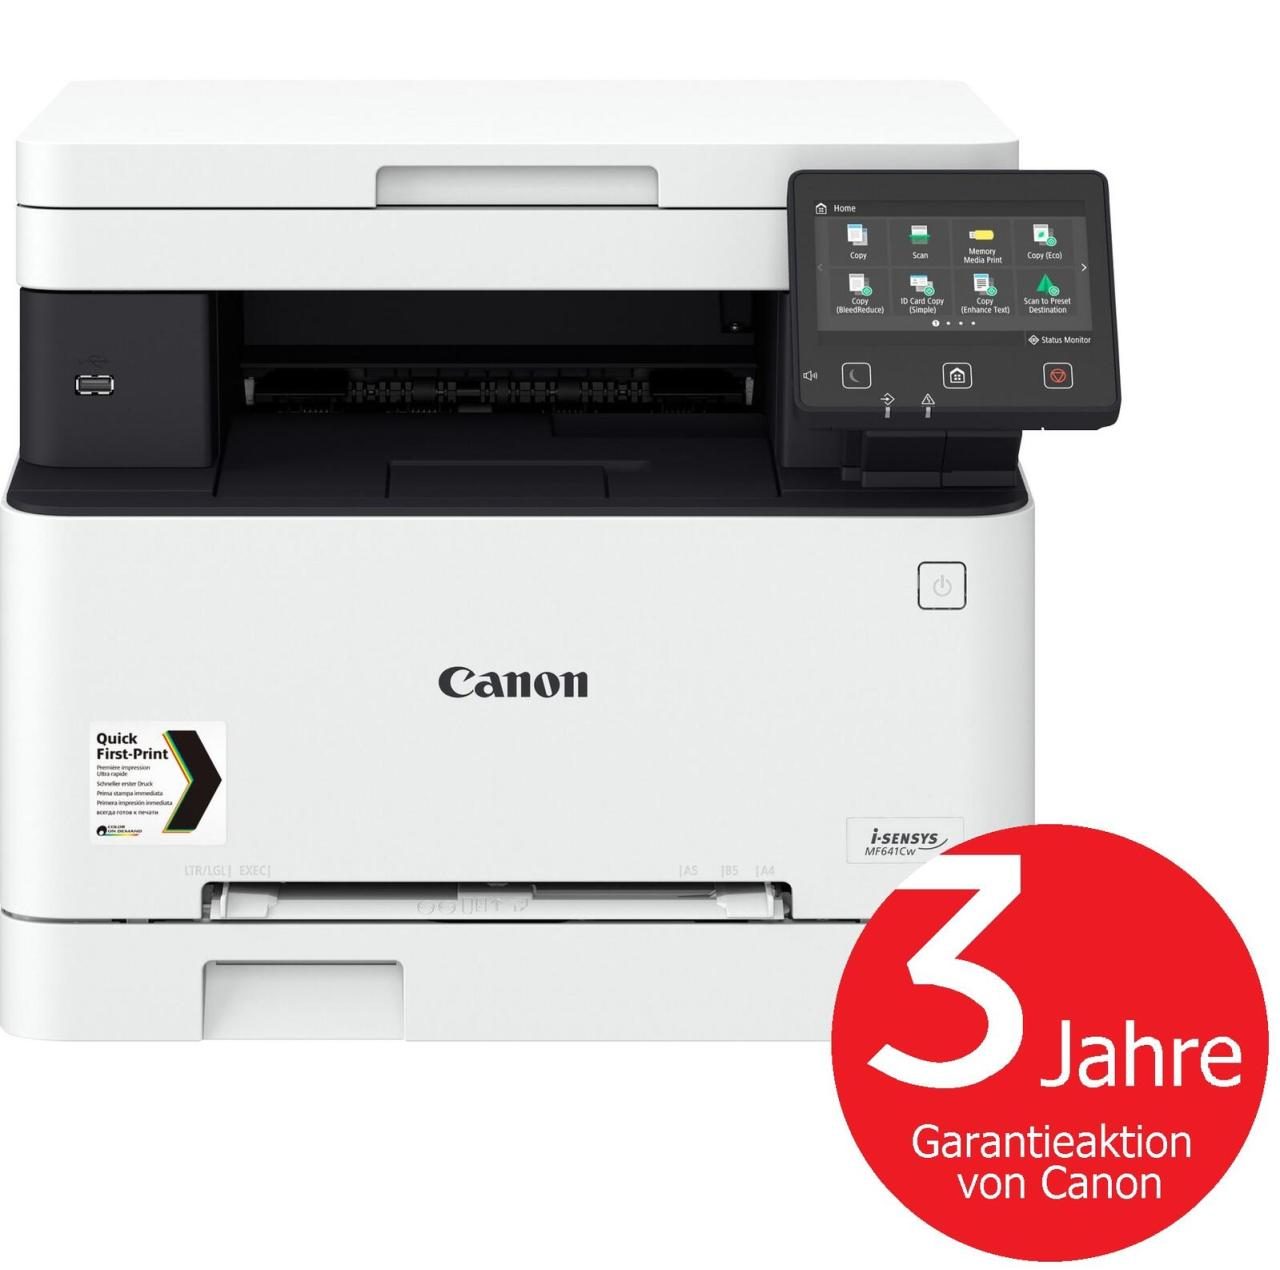 Canon i-SENSYS MF641Cw Farblaser-Multifunktionsdrucker von Canon